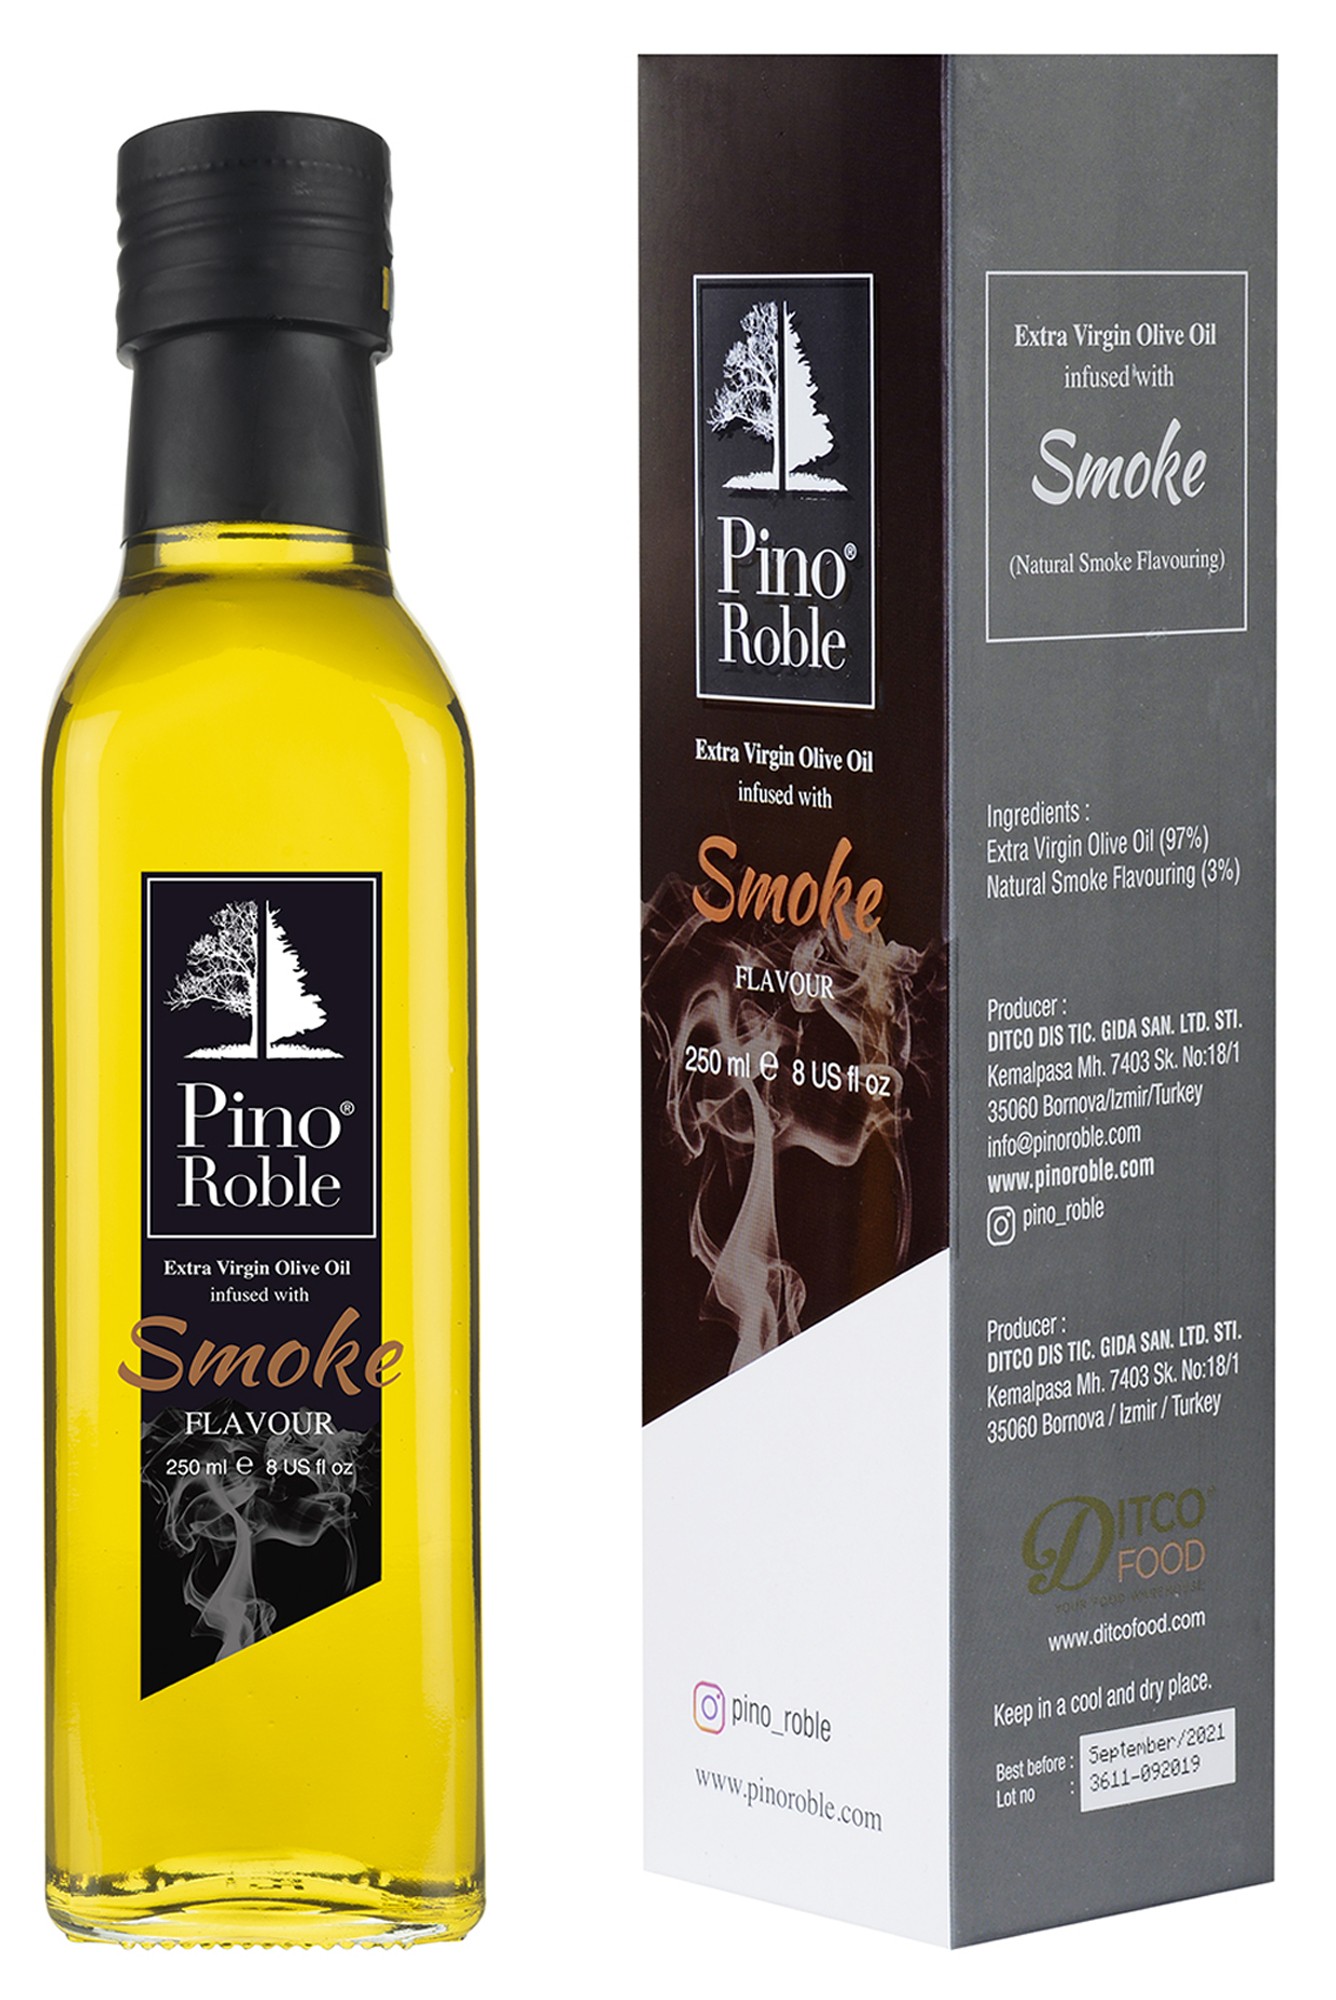 PinoRoble Tütsülenmiş Füme (Smoked Olive Oil) Barbekü Sos Aromalı Soğuk Sıkım Zeytinyağı 250ml